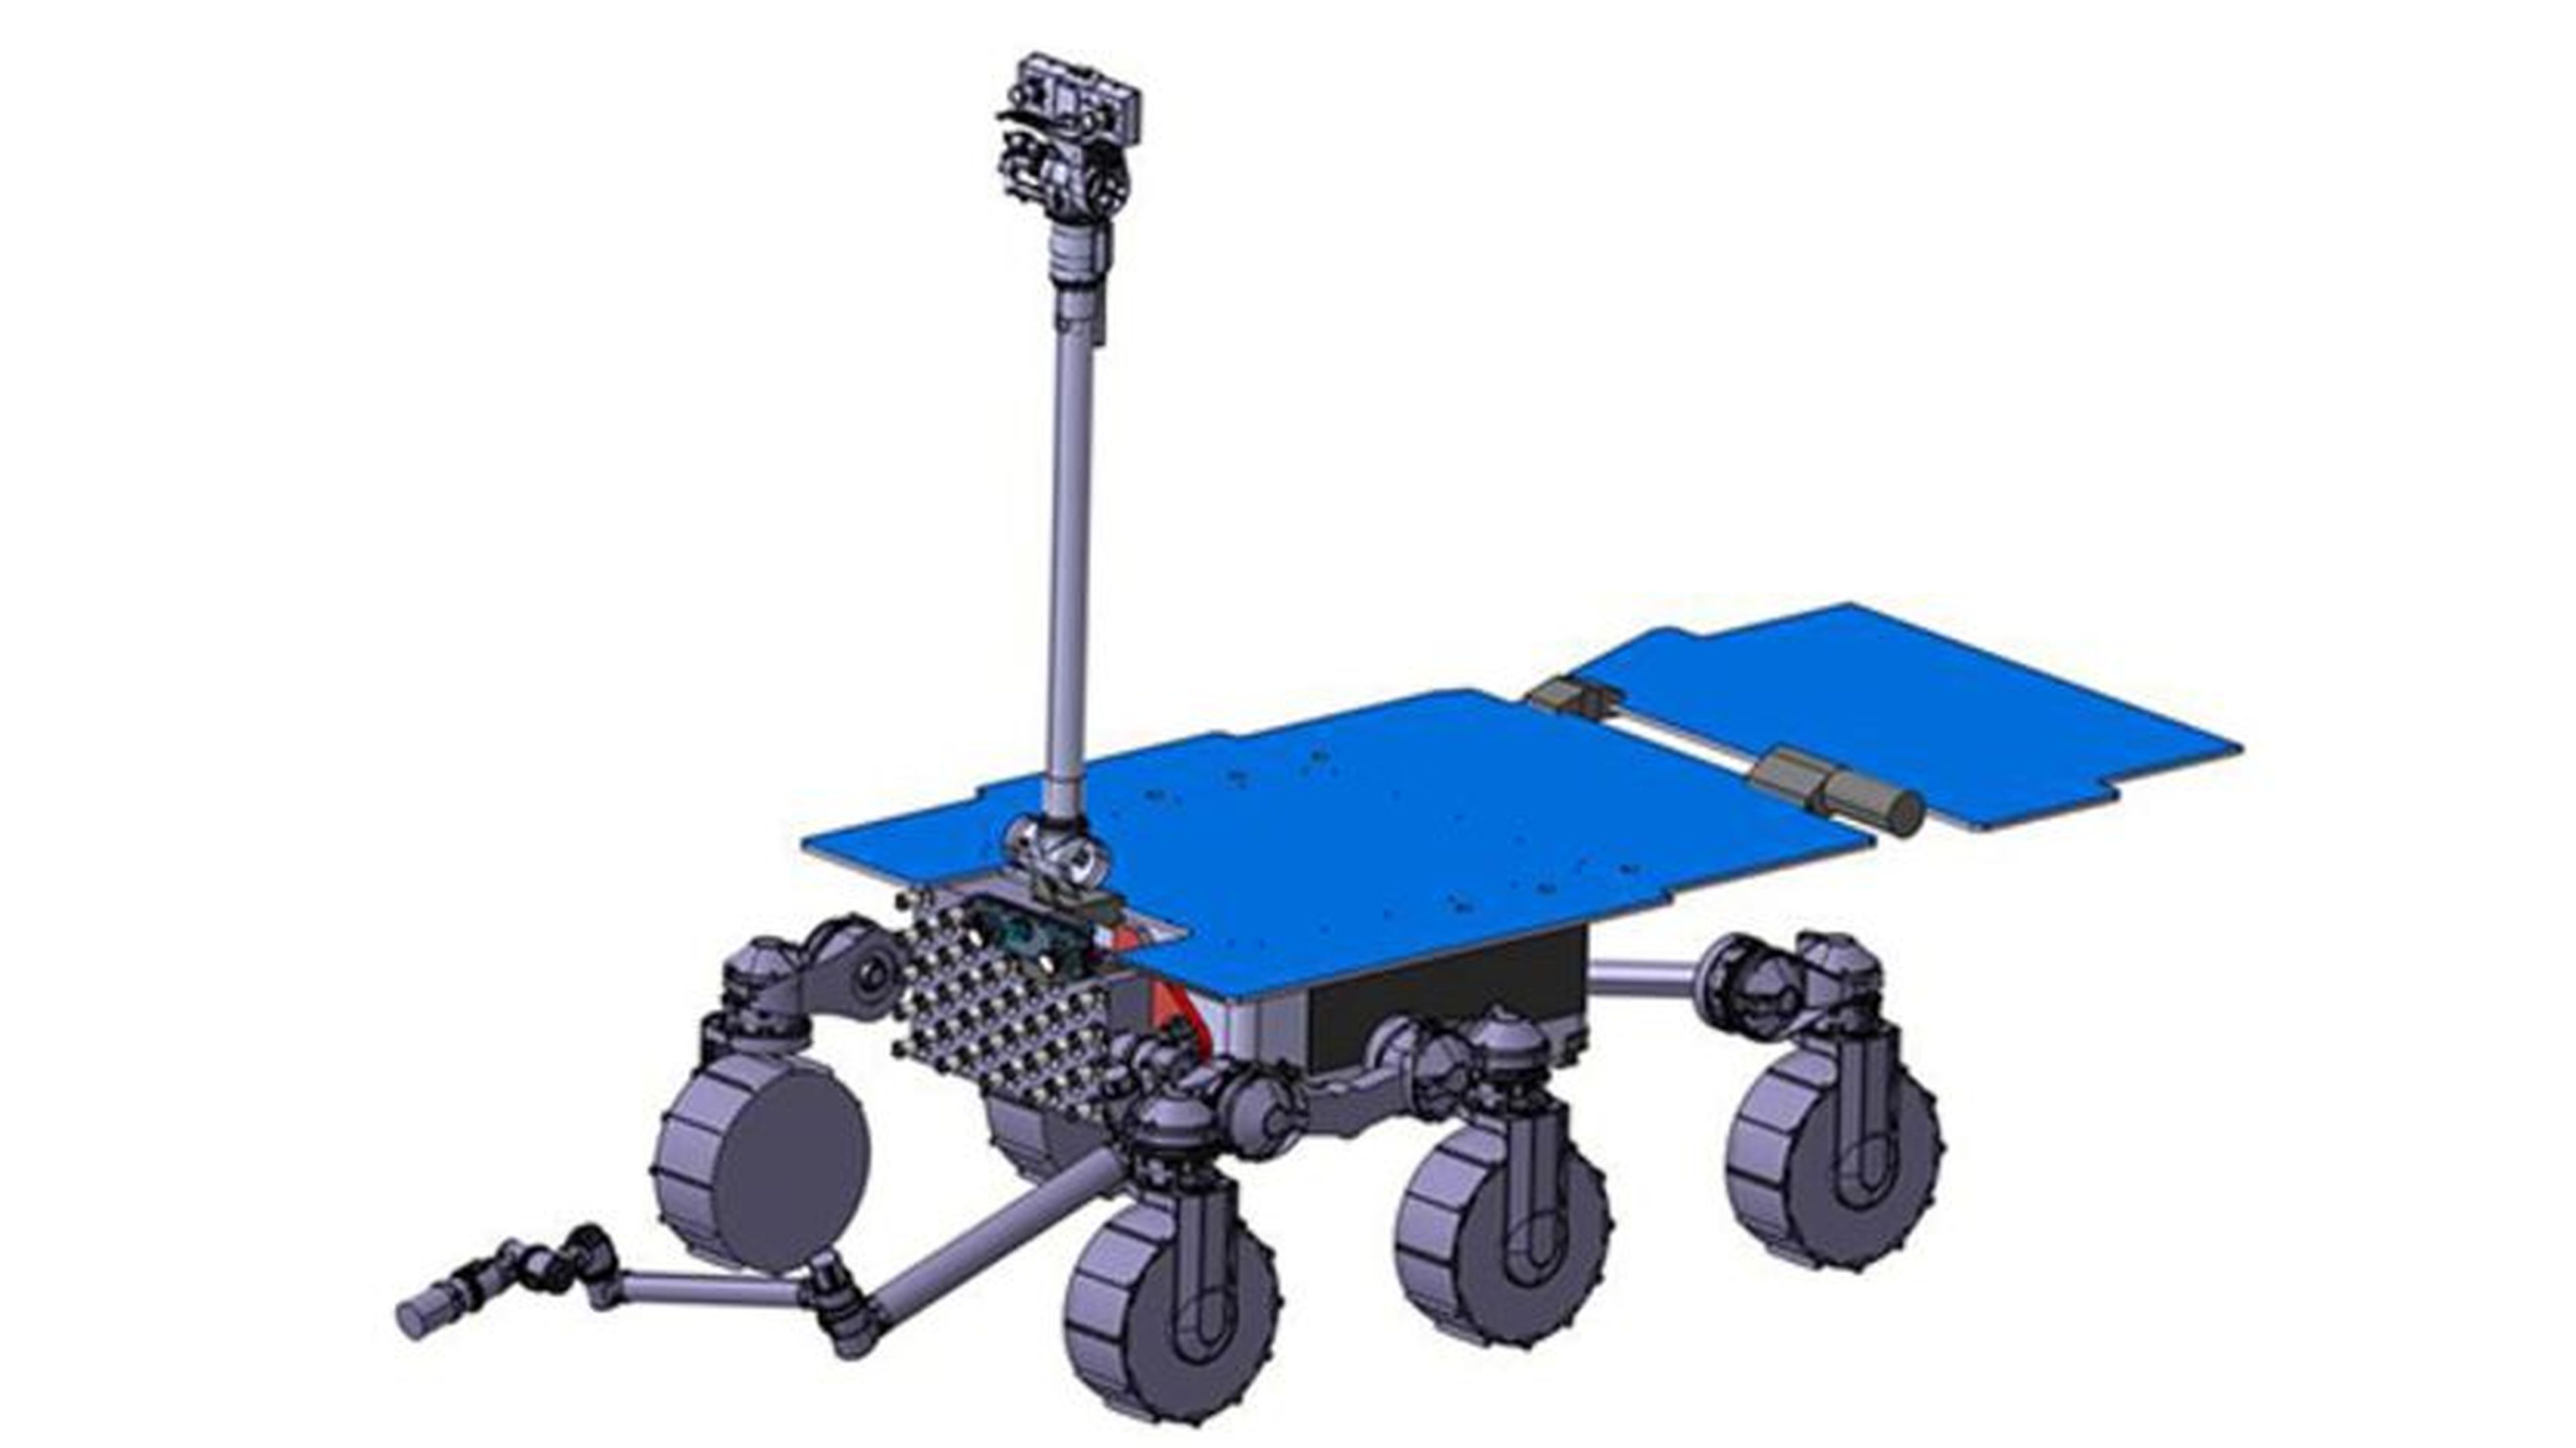 Rover Marte creado por Airbus